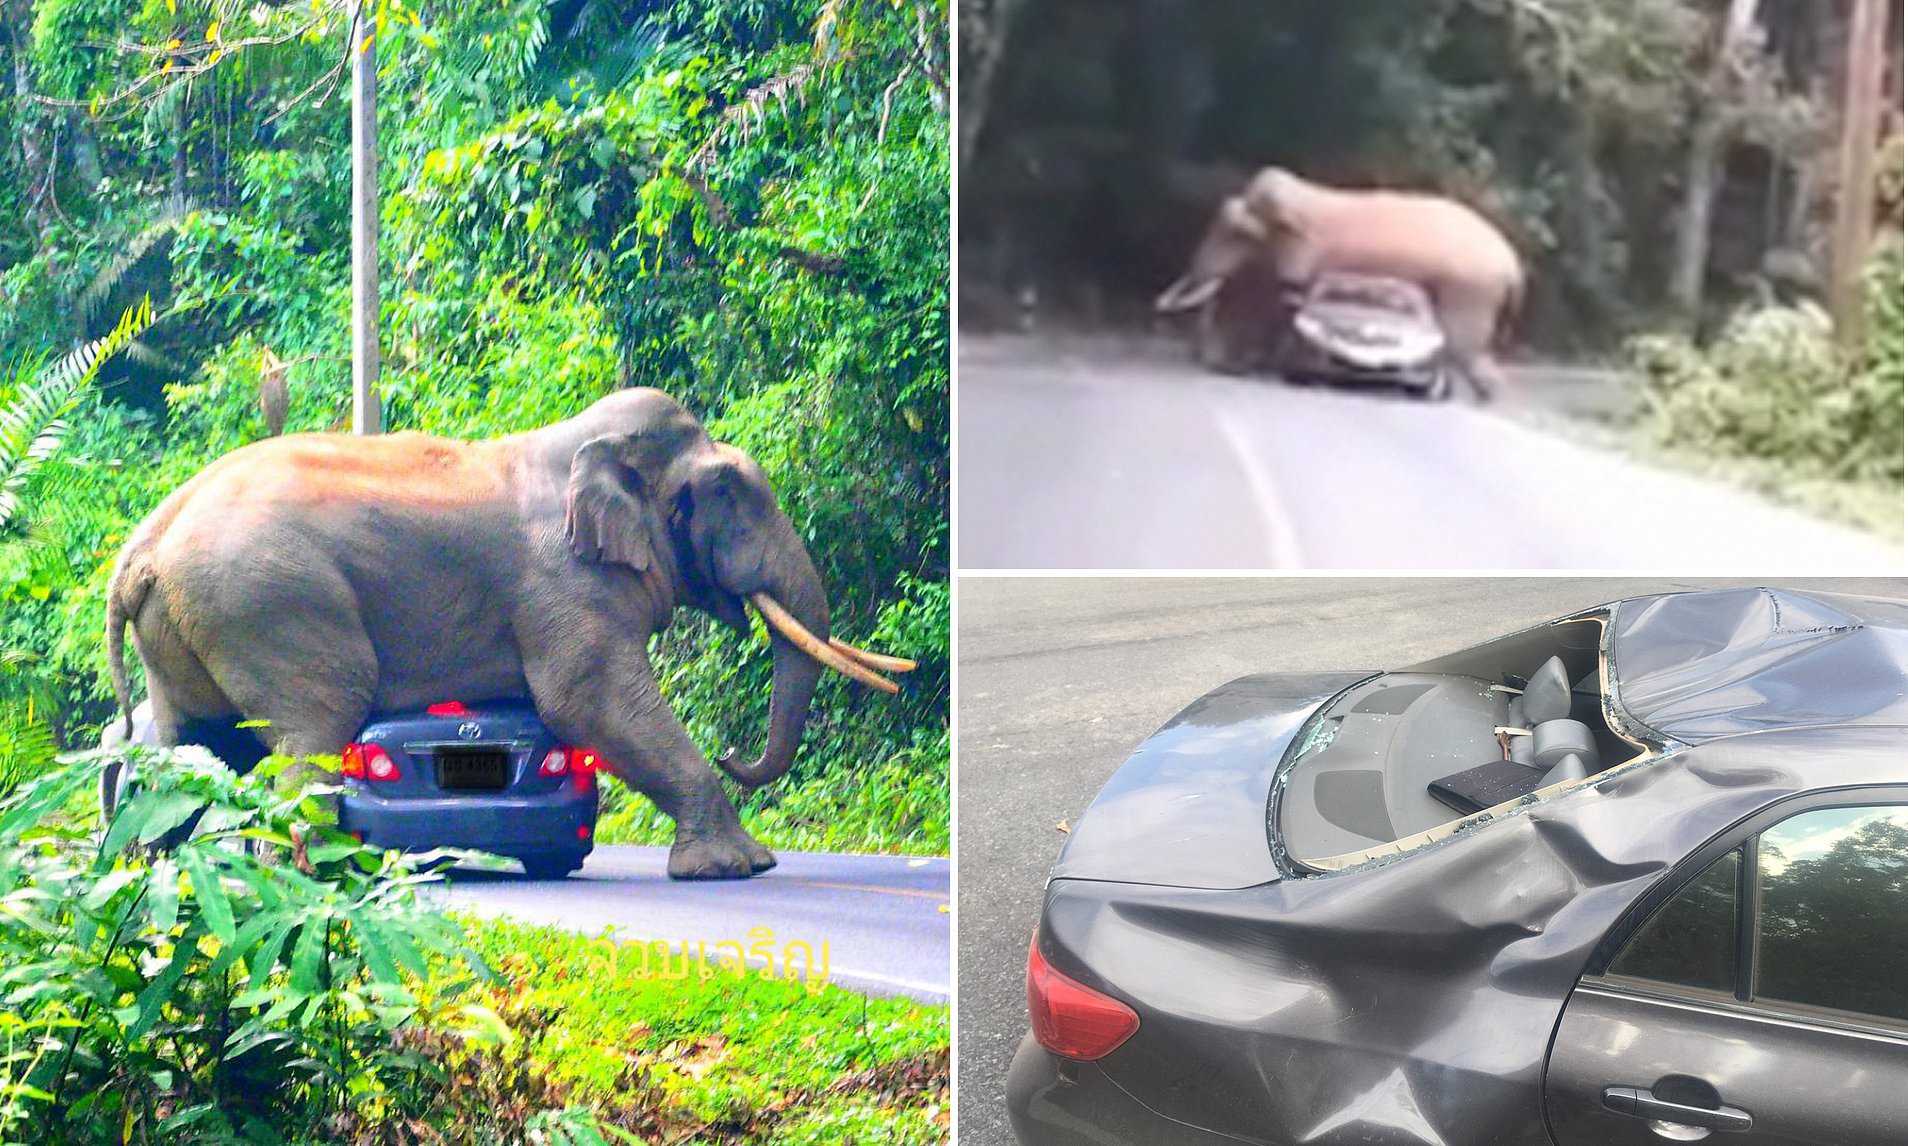 An elephant can climb. Тайланд слоны. Слоник машина. Слоник в автомобиле. Слон люди на машине.